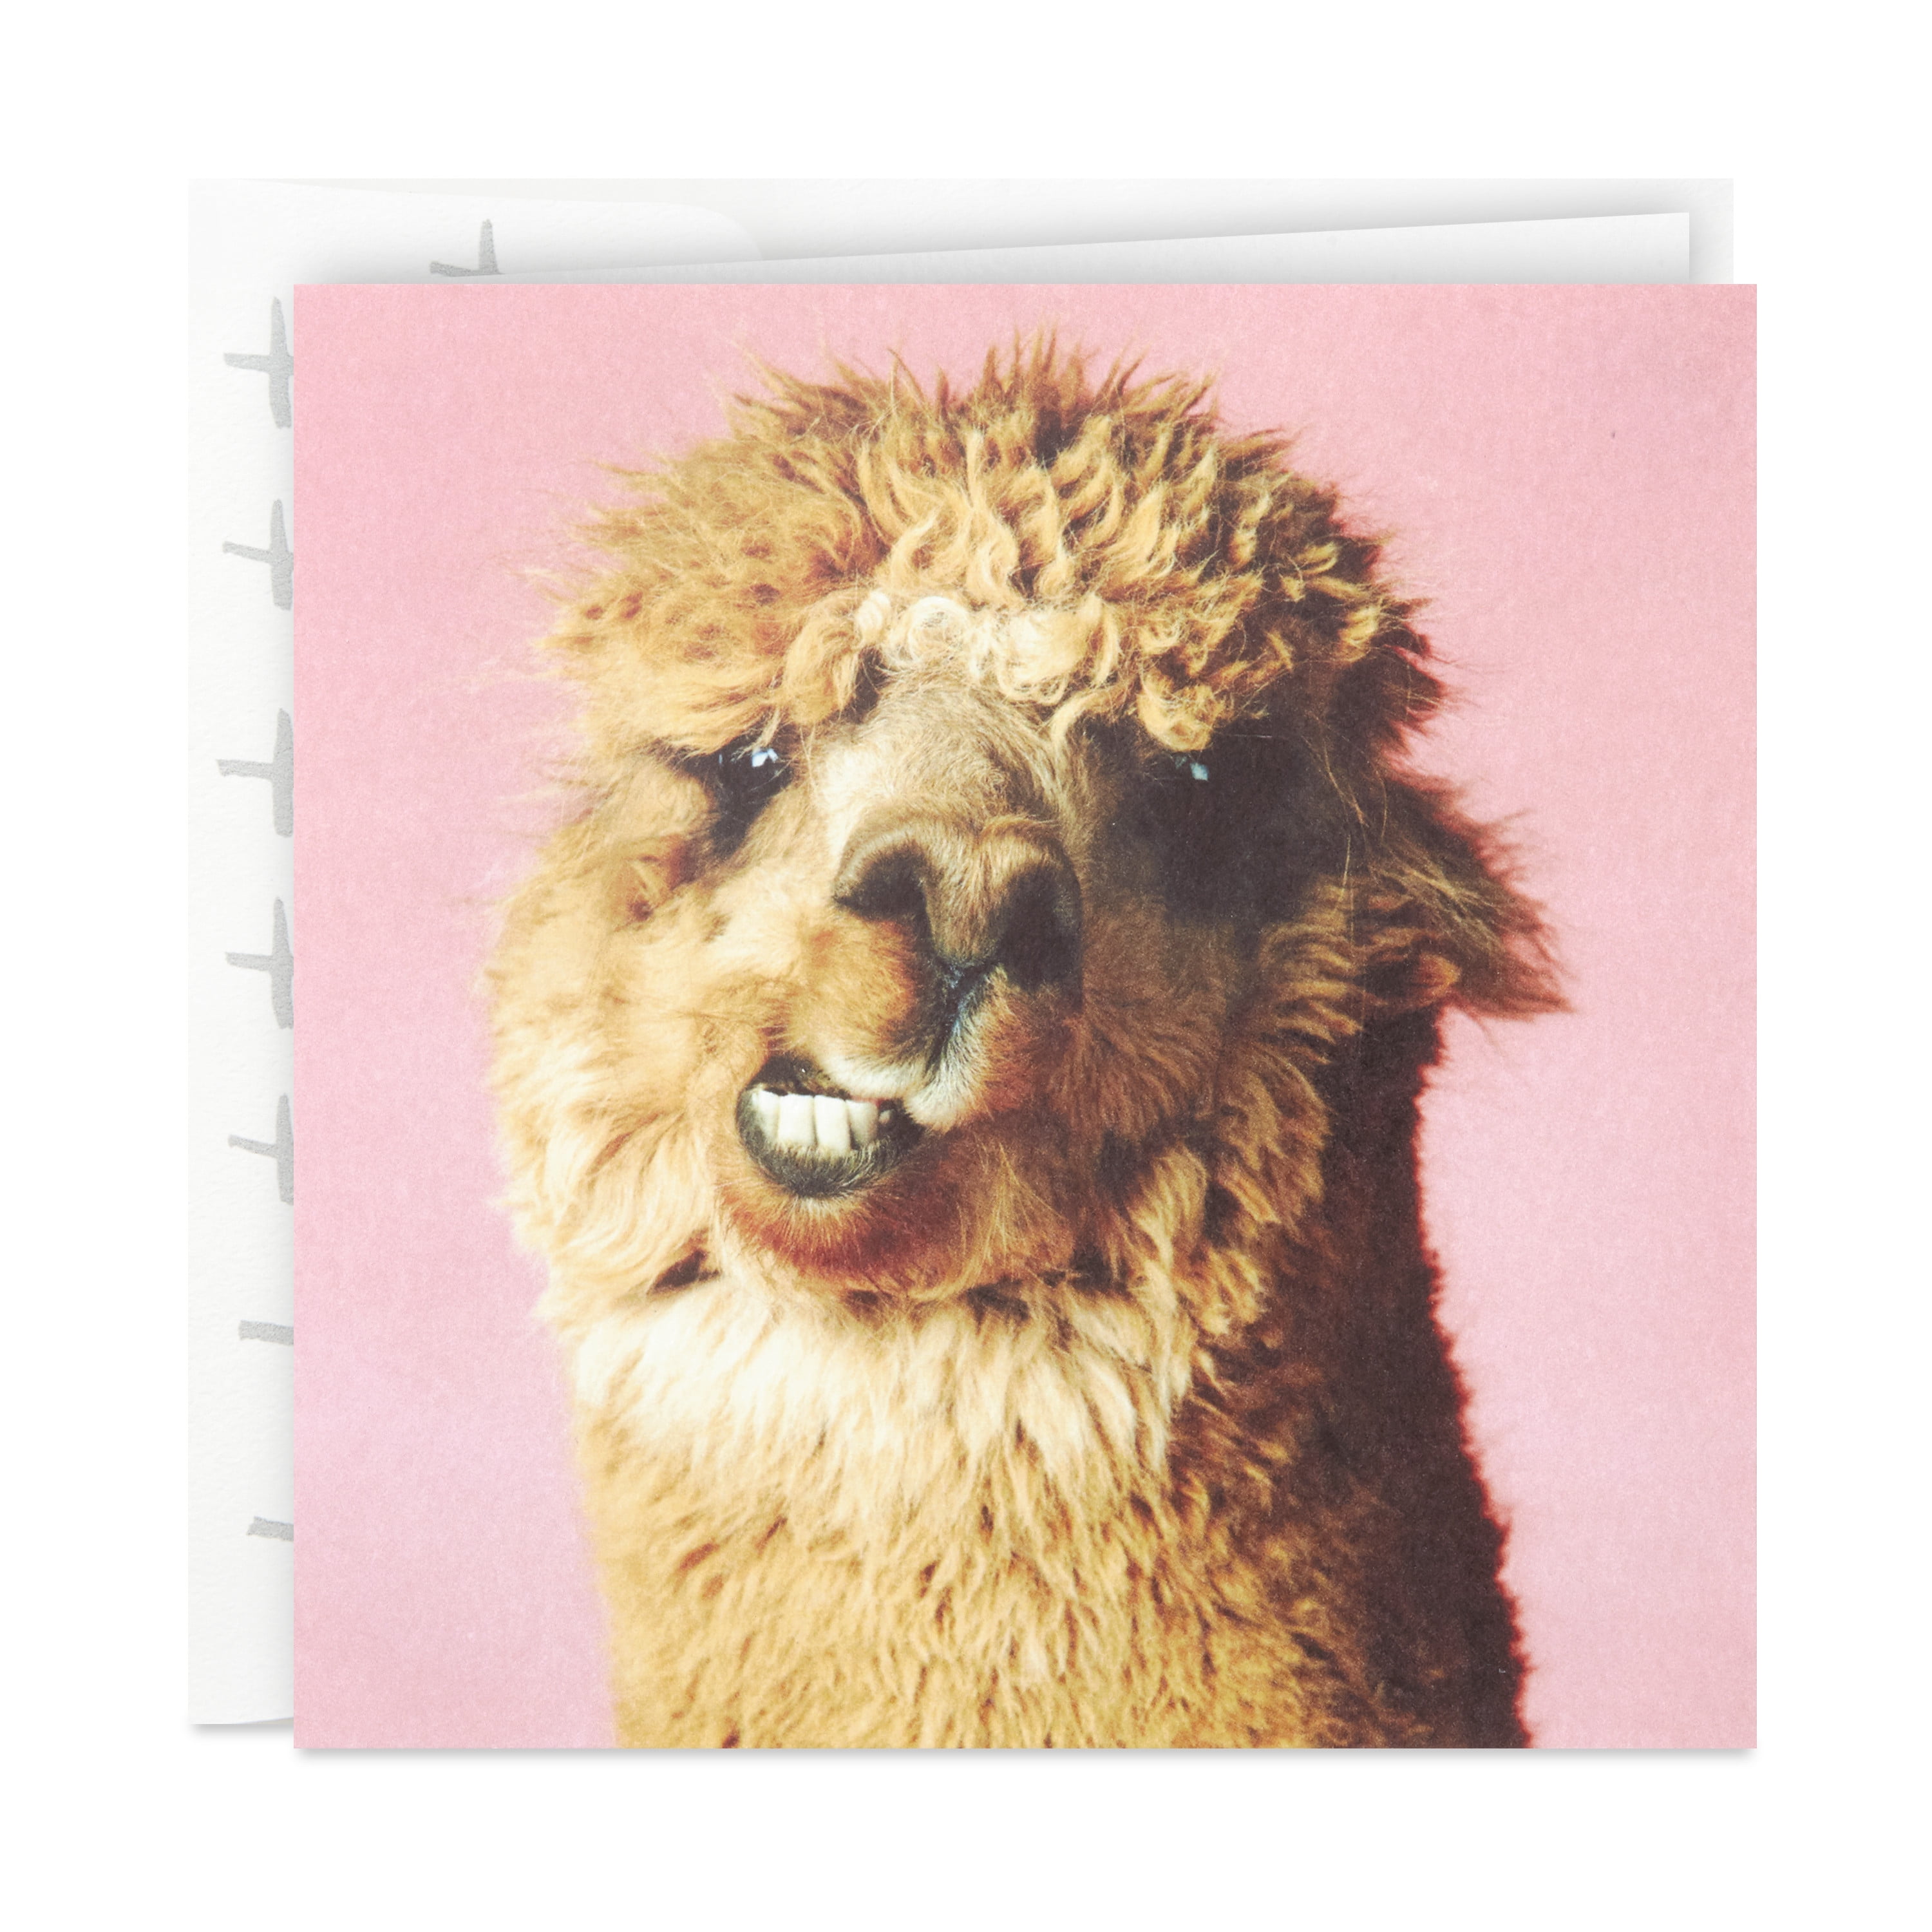 Alpaca Love Decor Decal Sticker Car Window Camelid Llama Cute Kids Free US Ship 